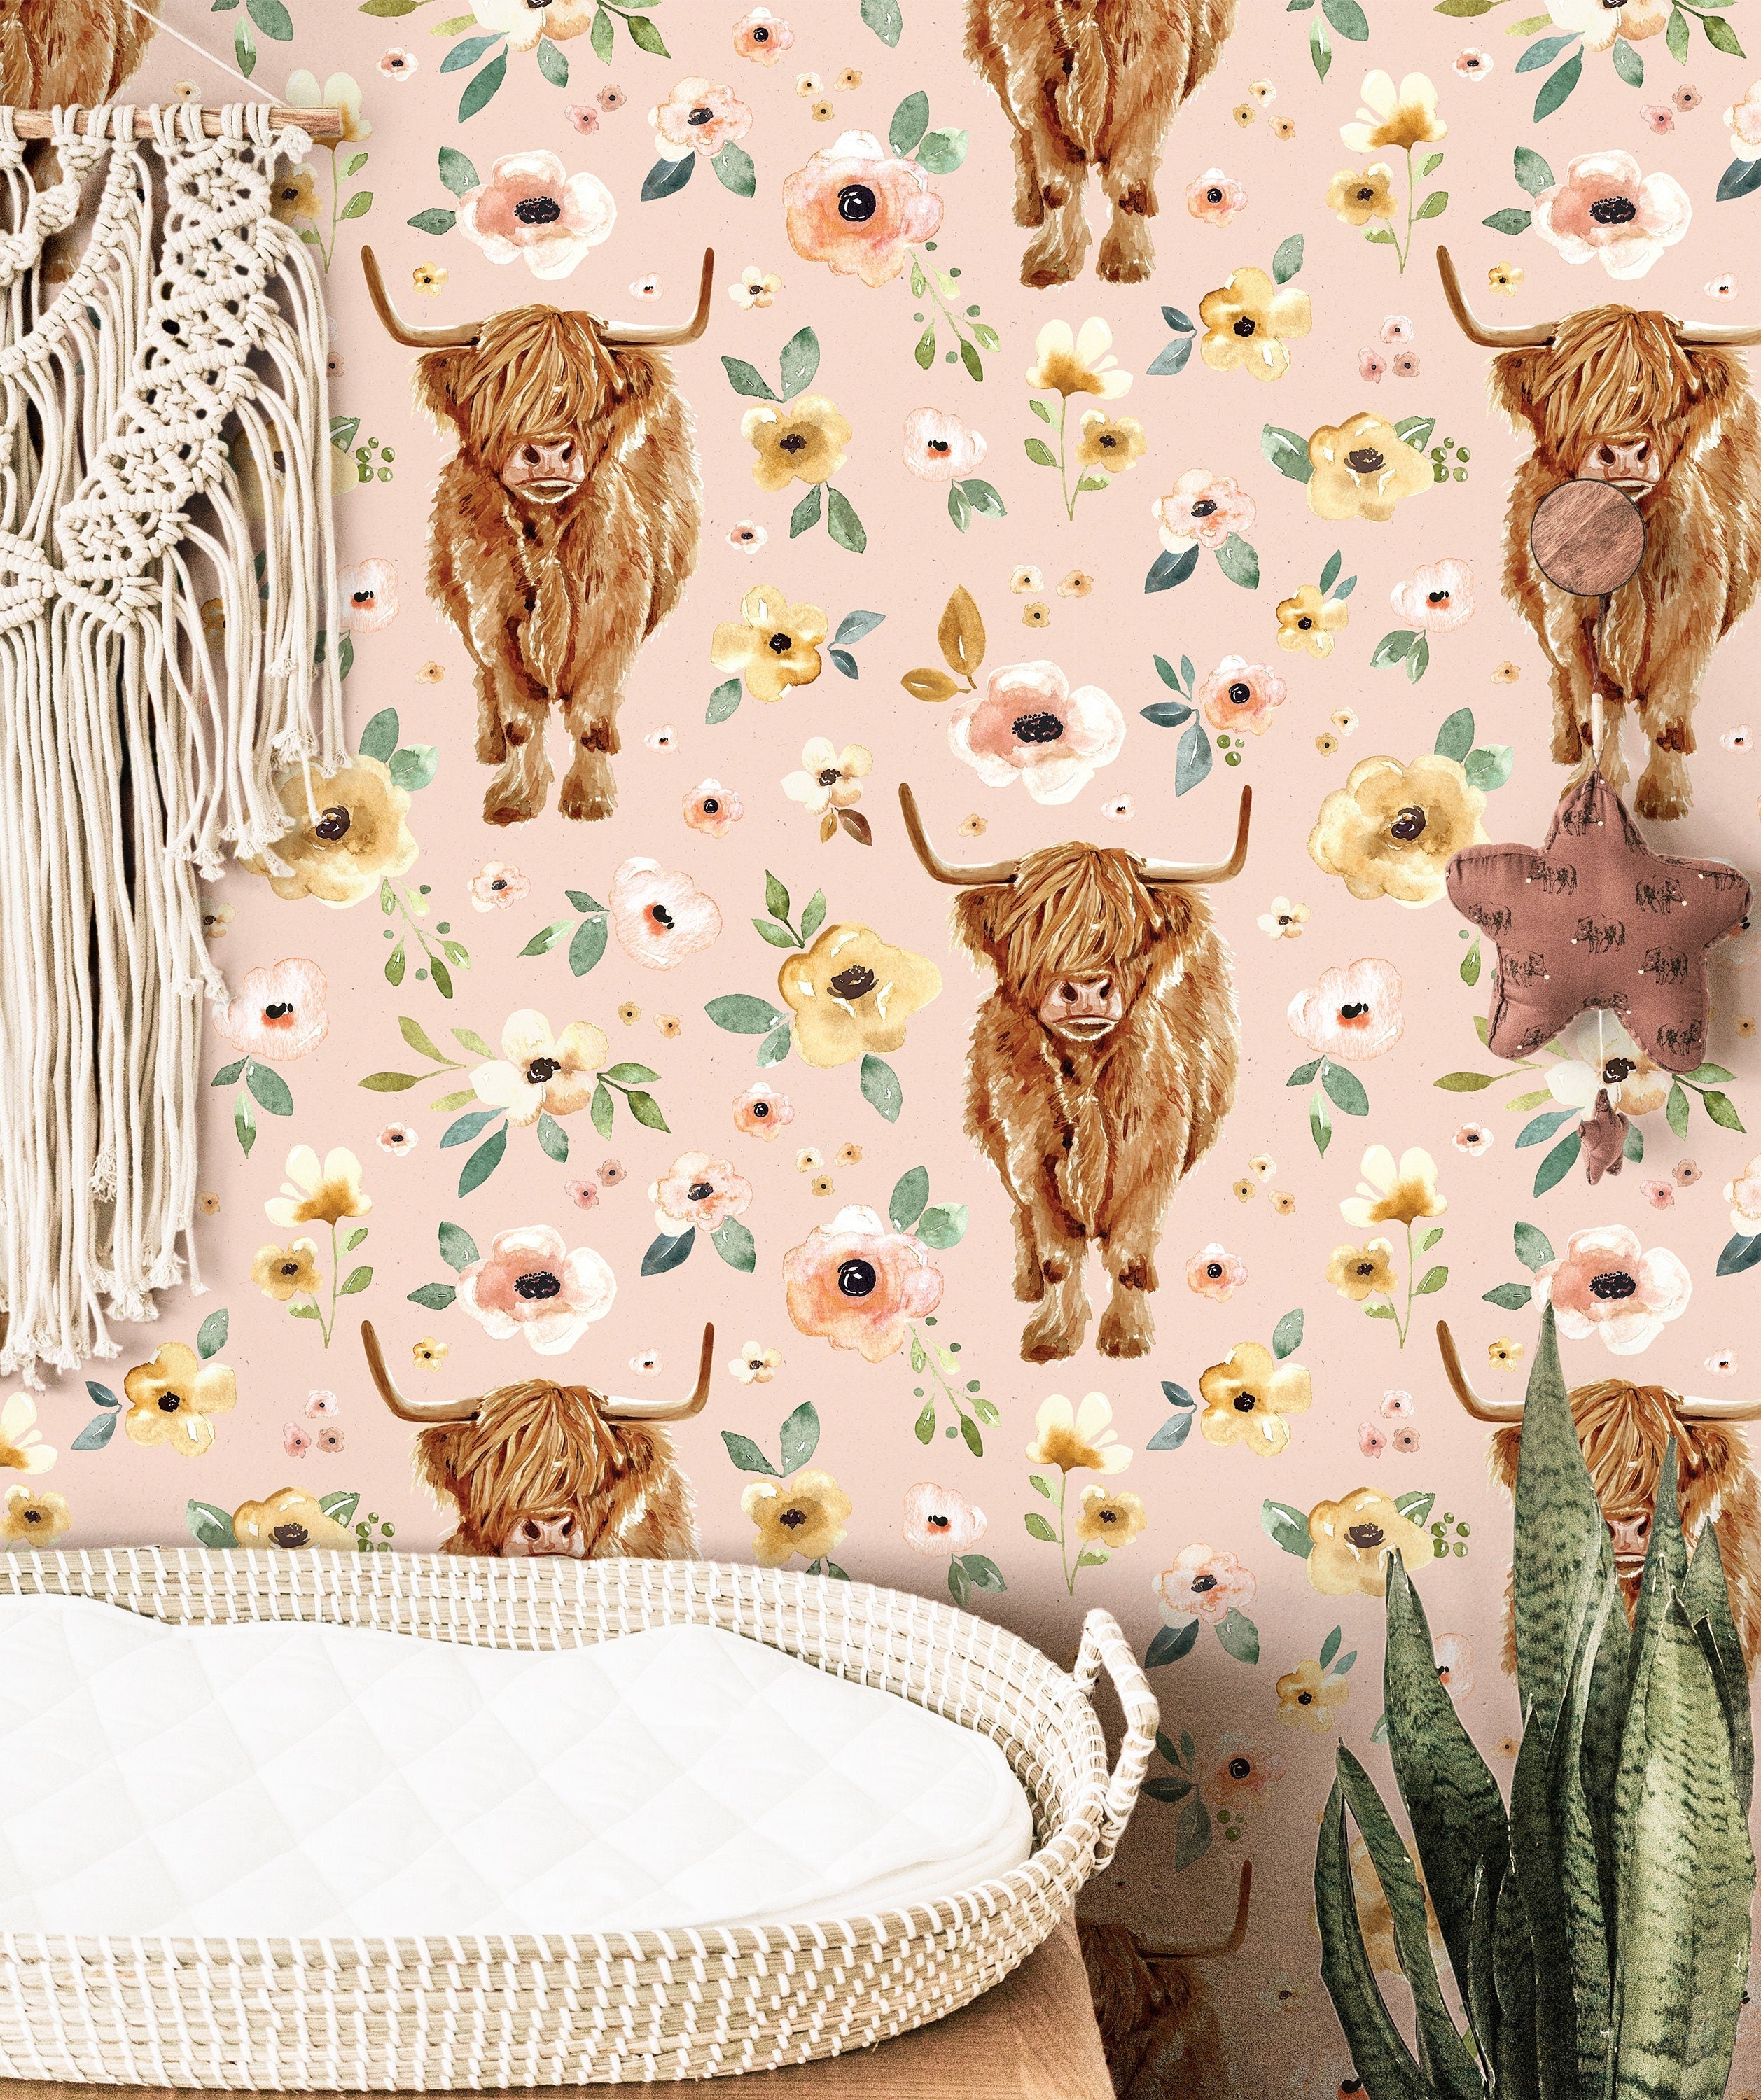 Highland Cow Floral Girls Wallpaper | Girls Nursery Wallpaper | Kids Wallpaper | Childrens Wallpaper | Peel Stick Removable Wallpaper | 3843 - JamesAndColors